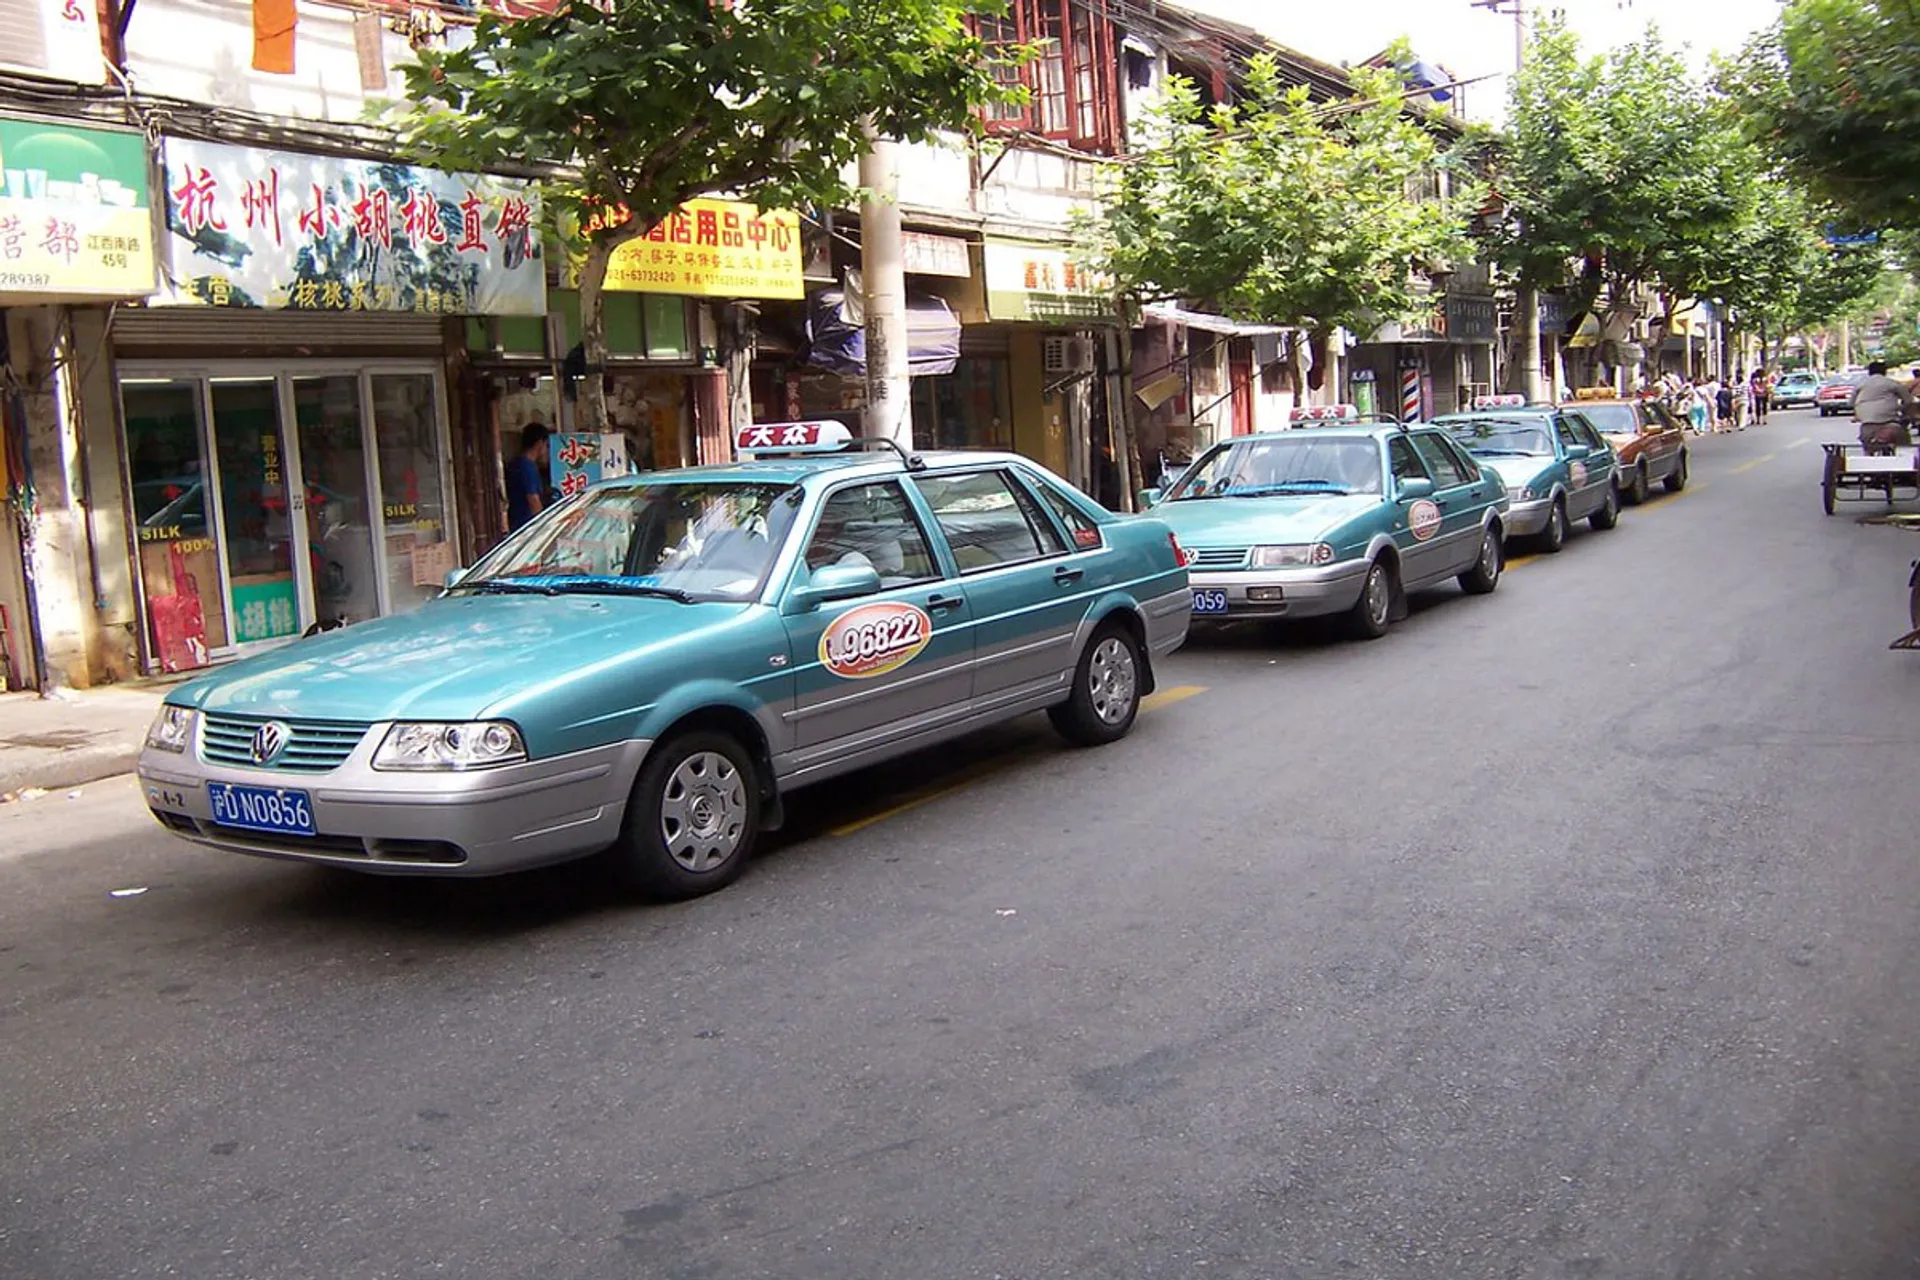 shanghai tourist bus routes